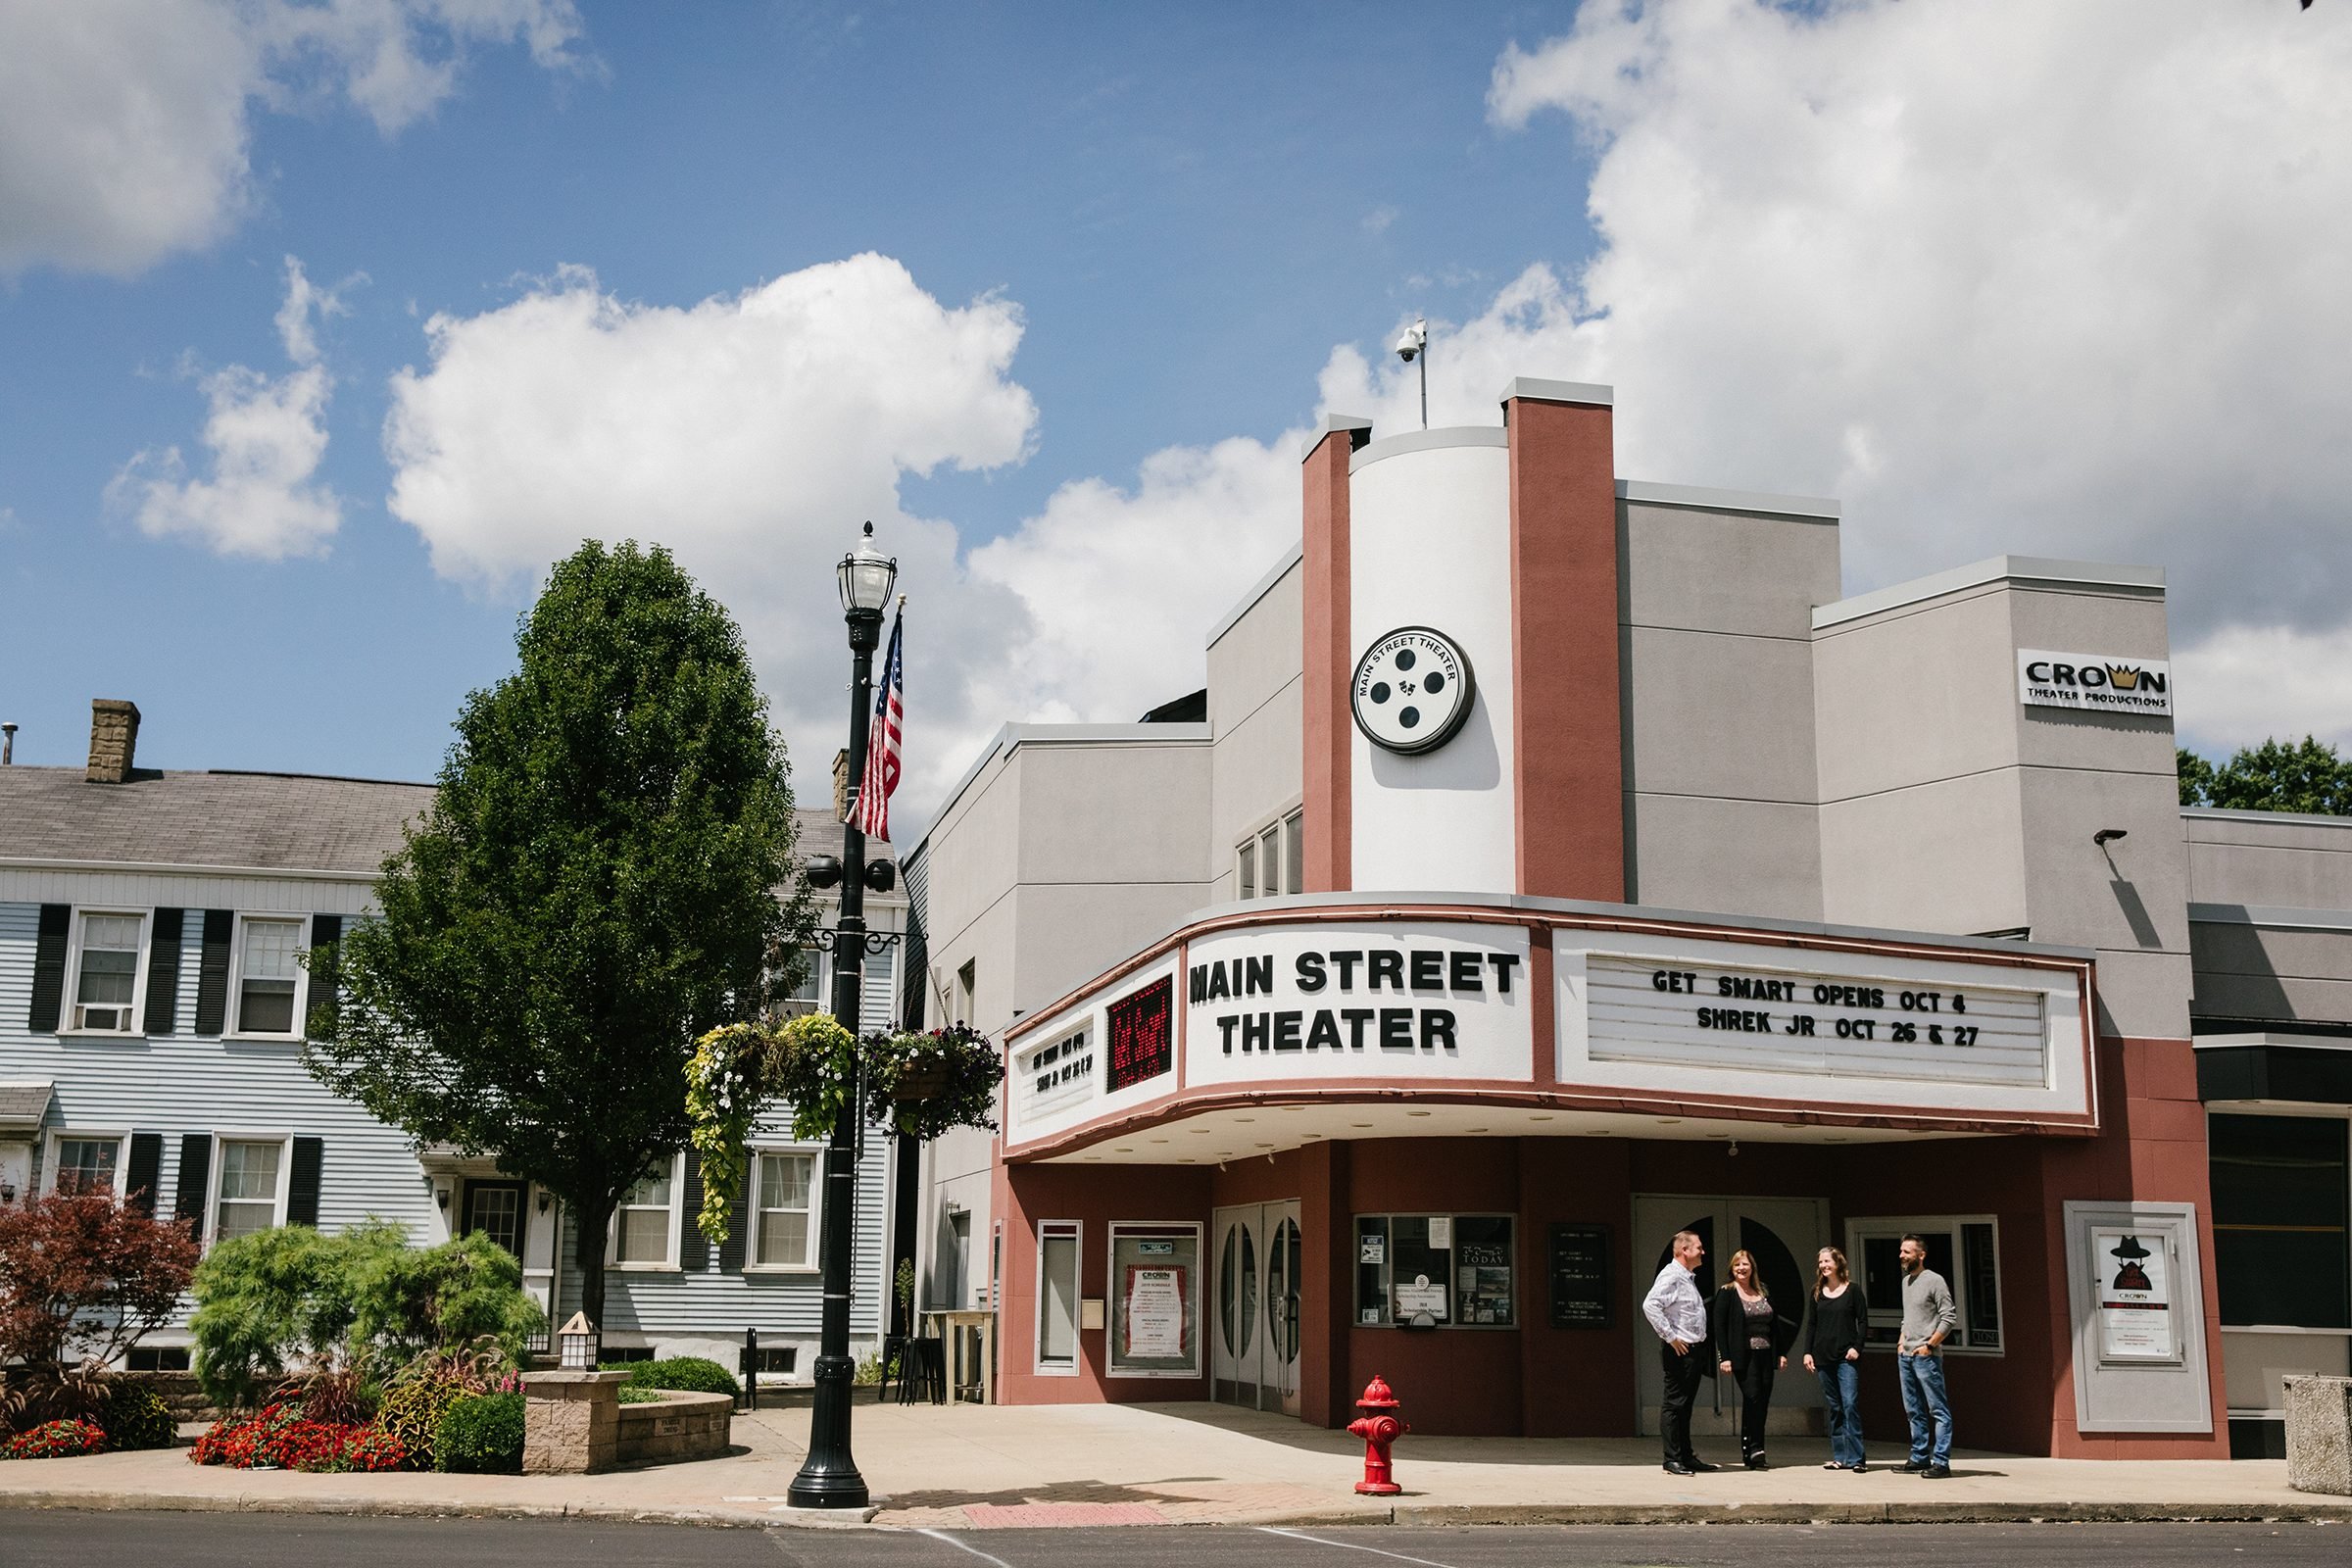 the facade of Main Street Theater in Columbiana, Ohio